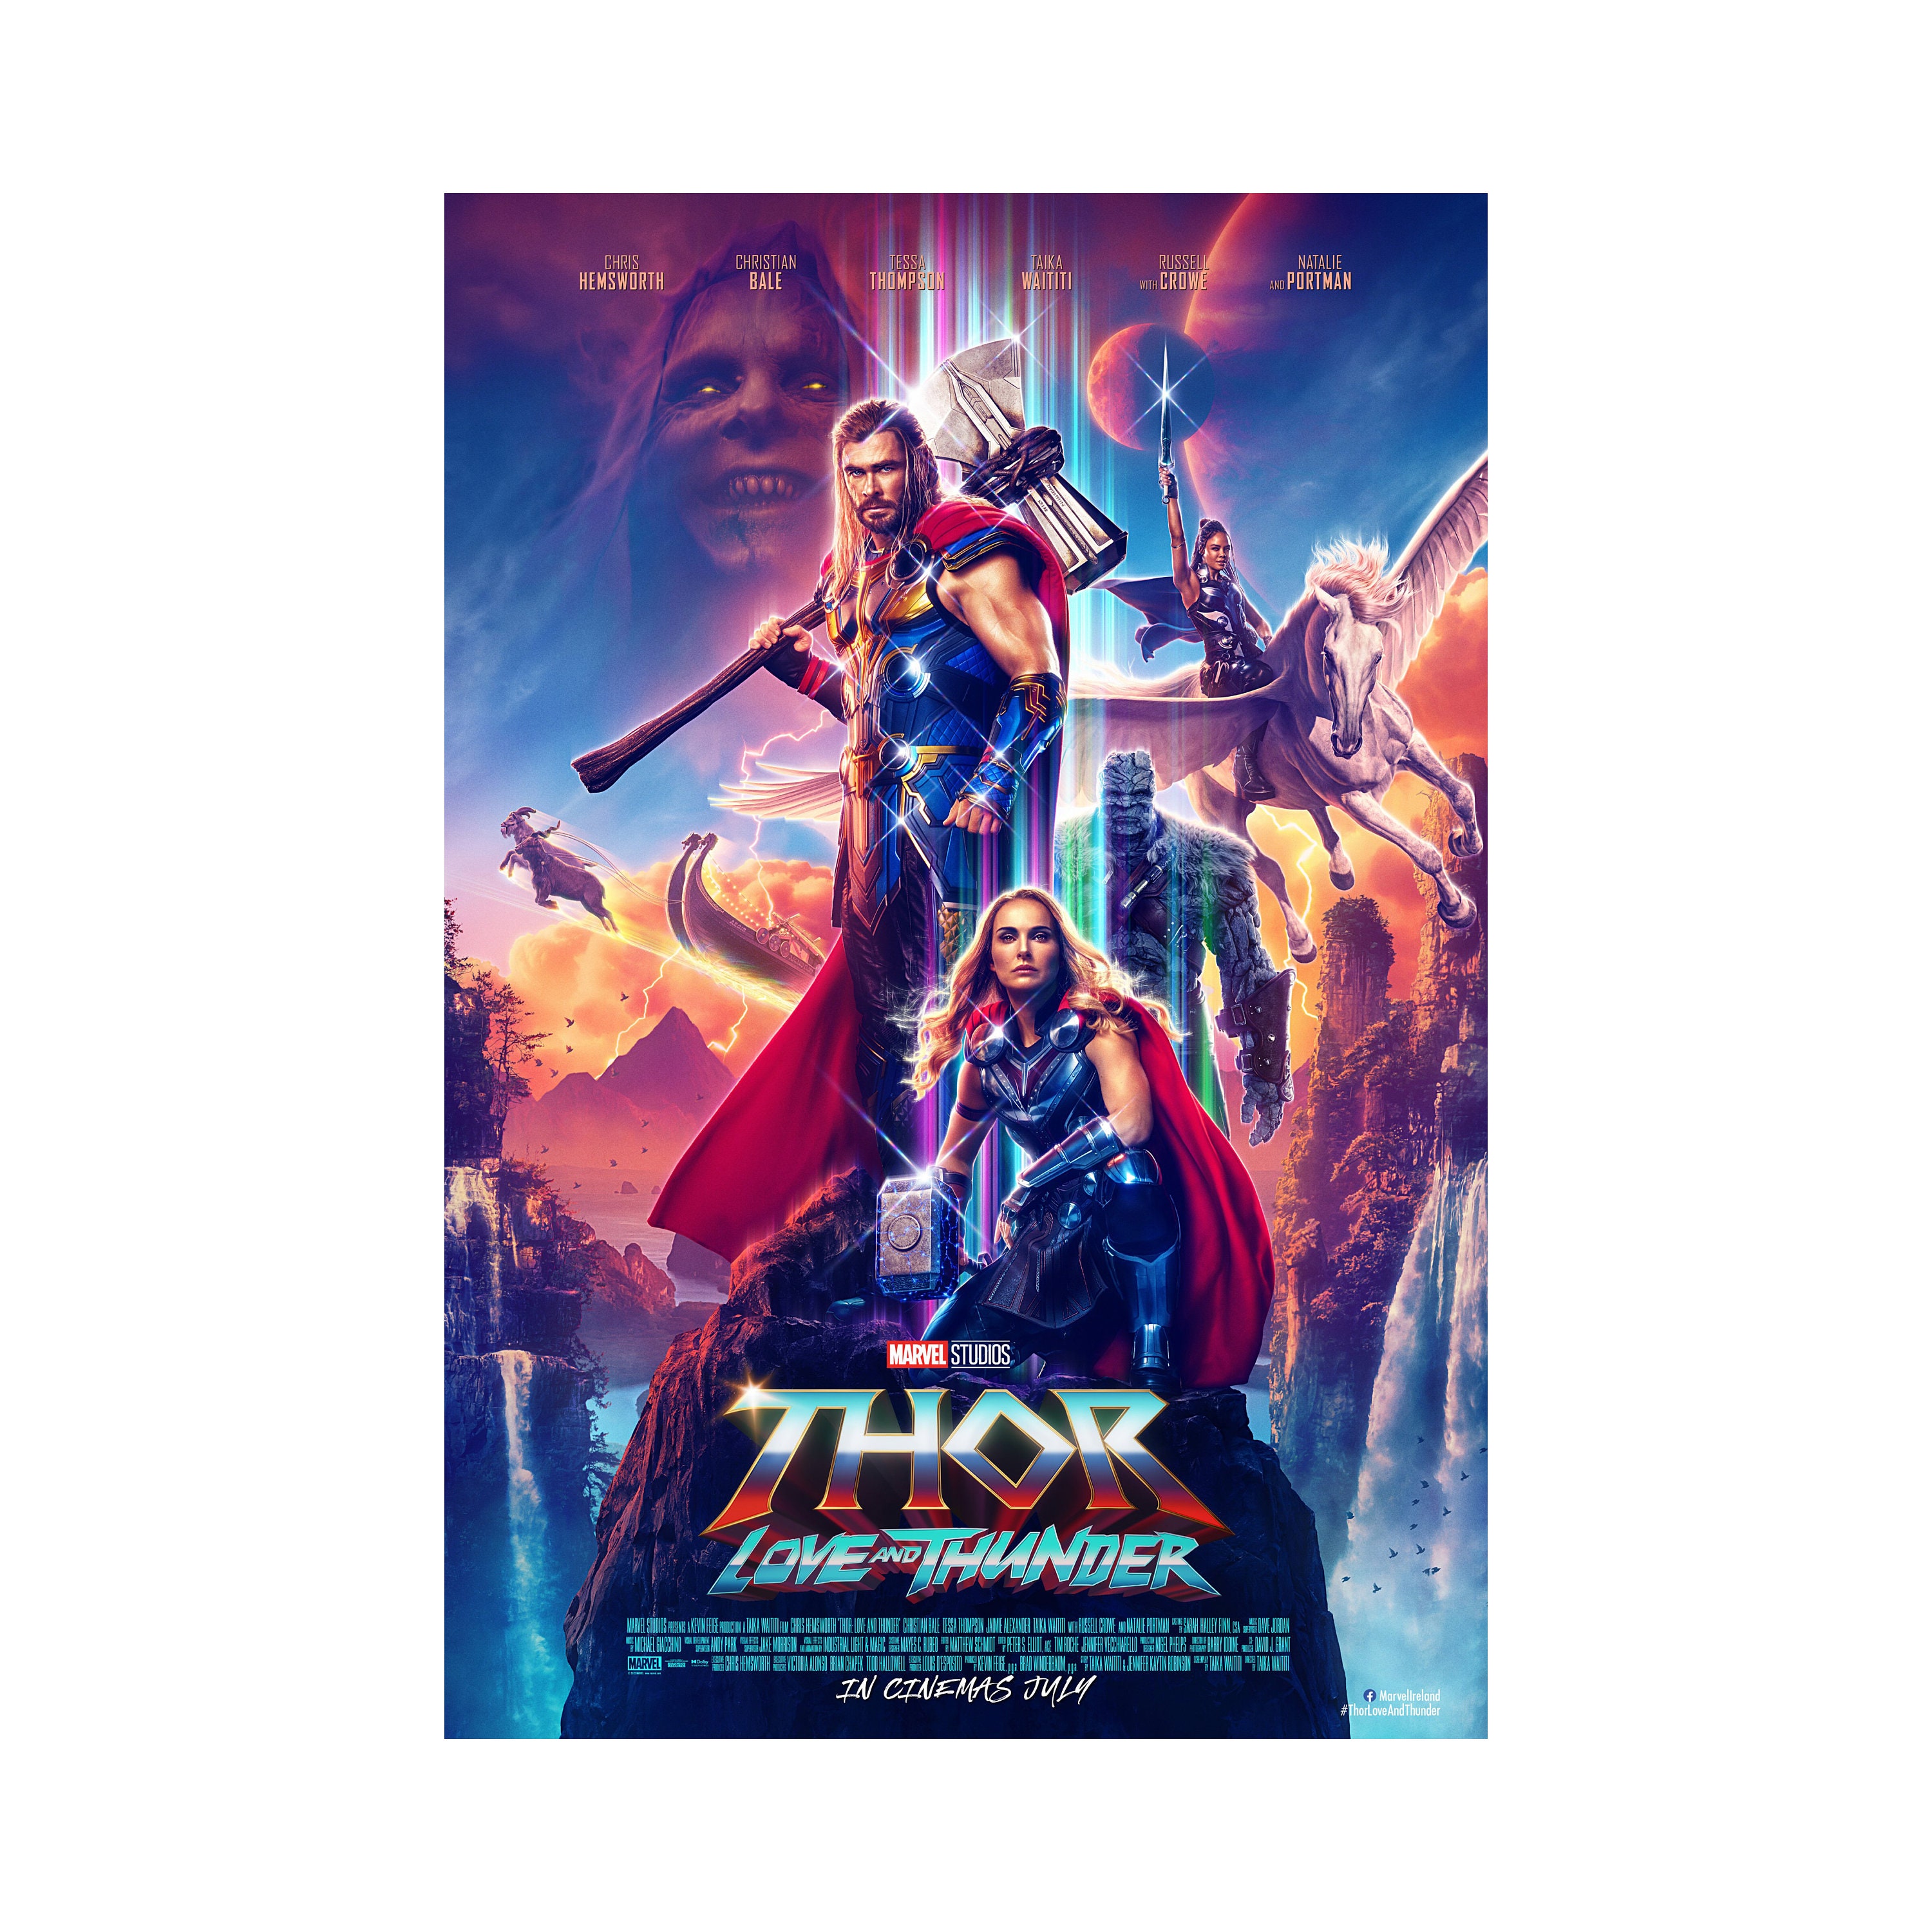 Avengers Endgame Movie Poster Print Art 8x10 11x17 16x20 22x28